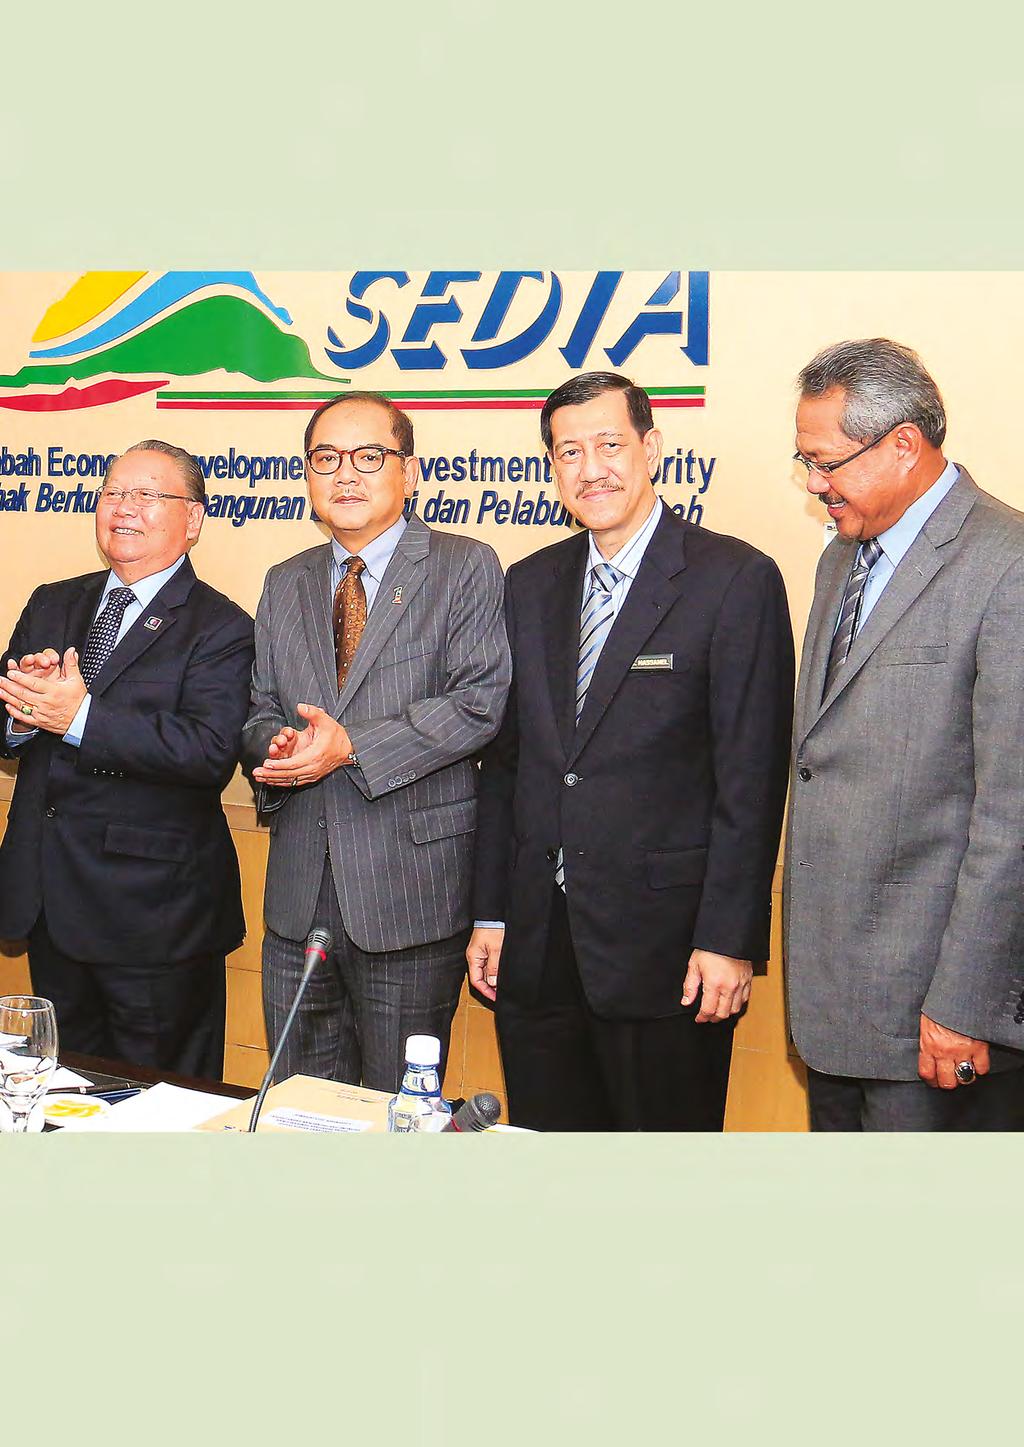 SEDIA Chairman Datuk Seri Panglima Musa Haji Aman (5th from right) launching the SEDIA